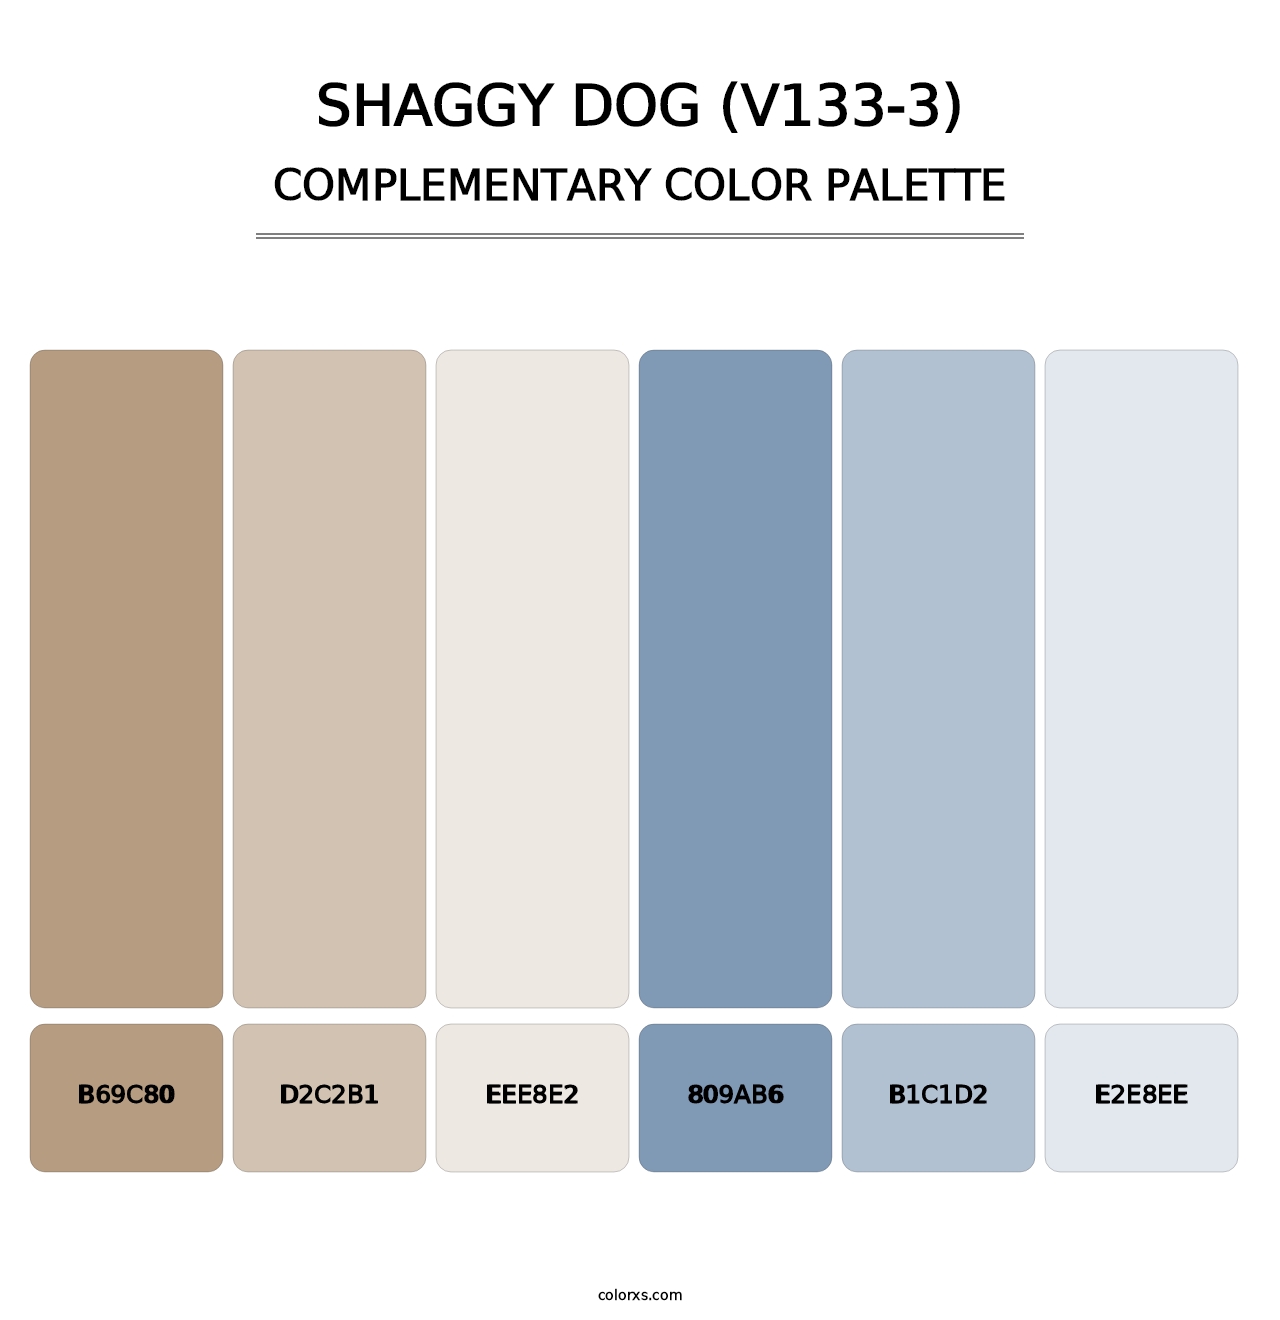 Shaggy Dog (V133-3) - Complementary Color Palette